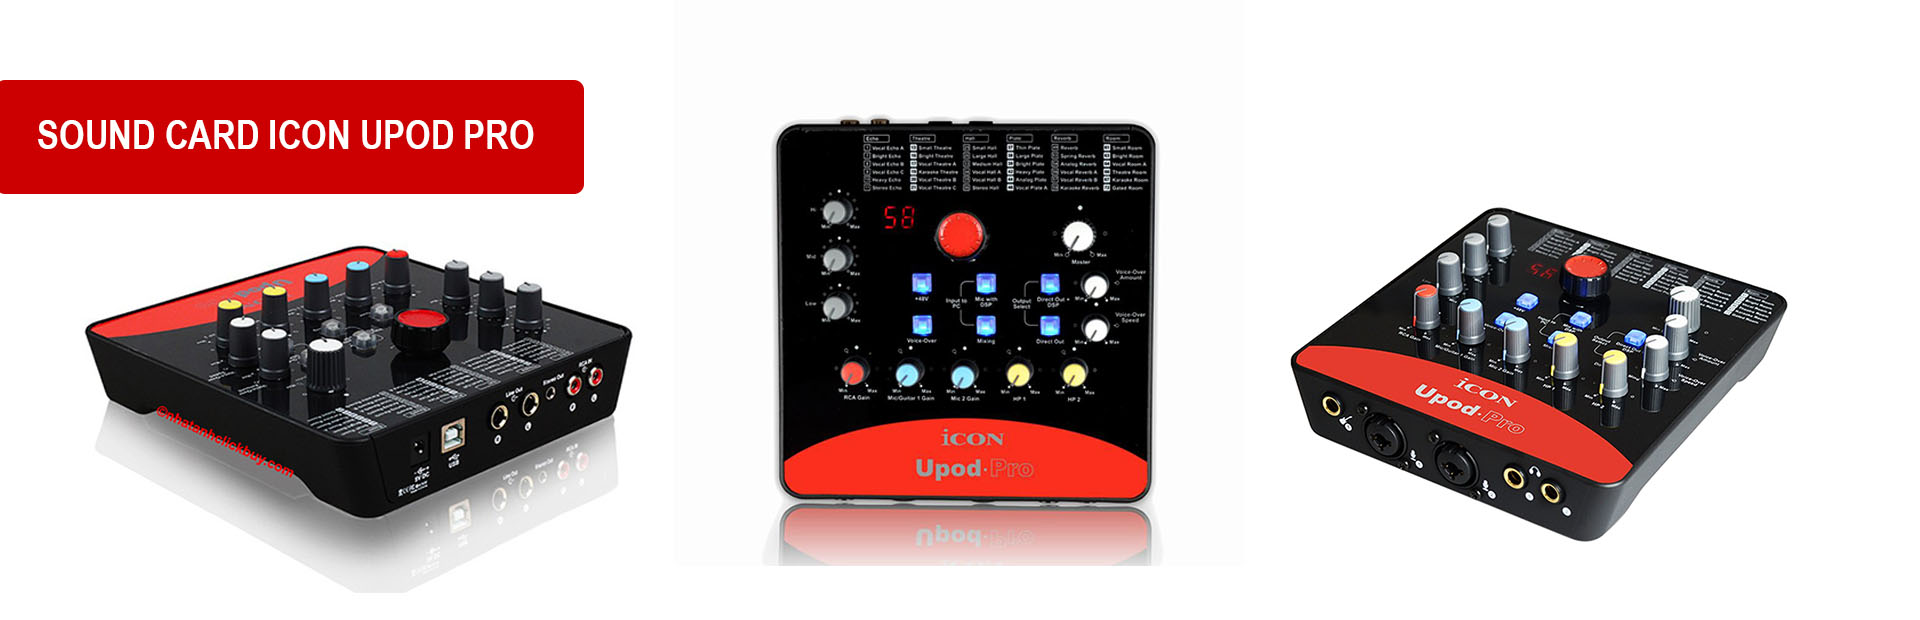 Sound card Icon Upod Pro trong bộ combo micro thu âm livestream cao cấp